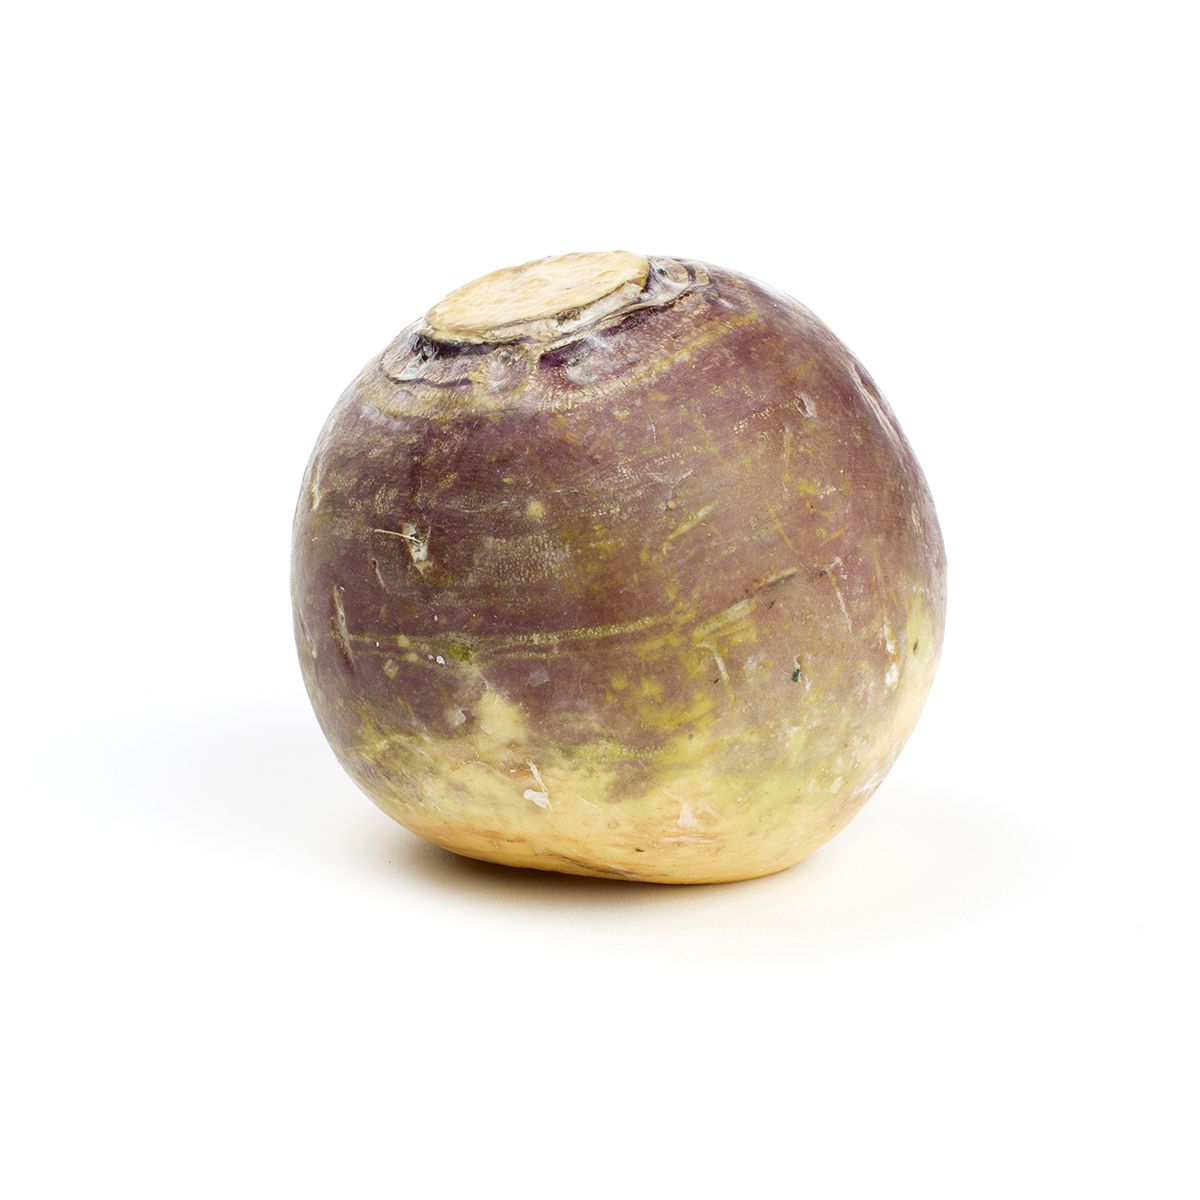 BoxNCase Unwaxed Rutabaga Turnips